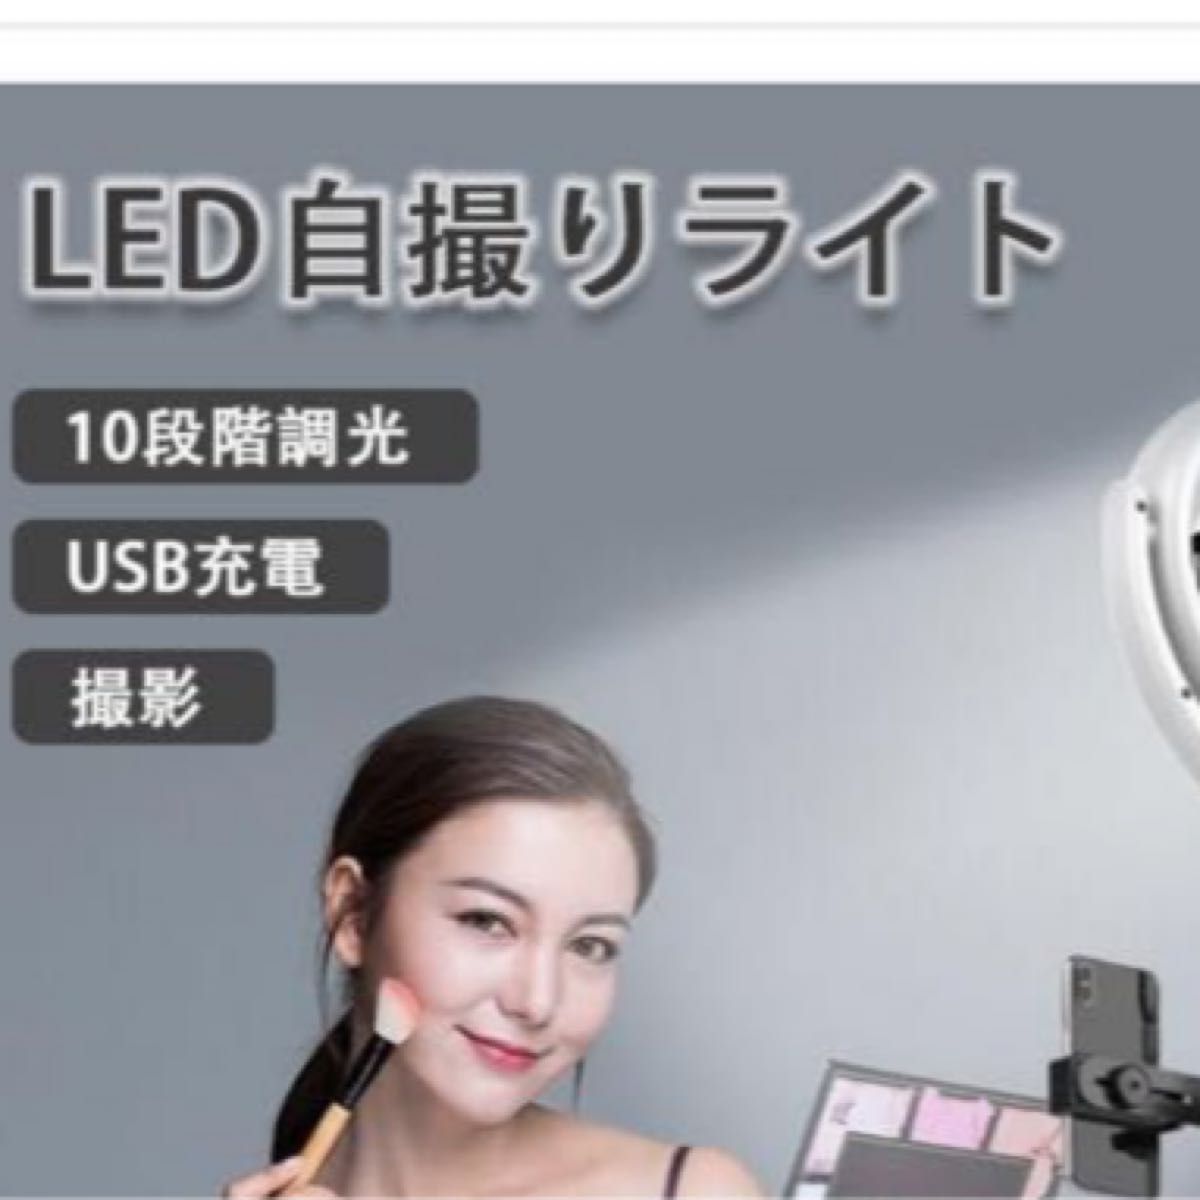 LEDリングライト 自撮りライト 撮影照明用ライト USB充電 10段階調光 YOUTUBE生放送 動画撮影 美容化粧 ライブ配信